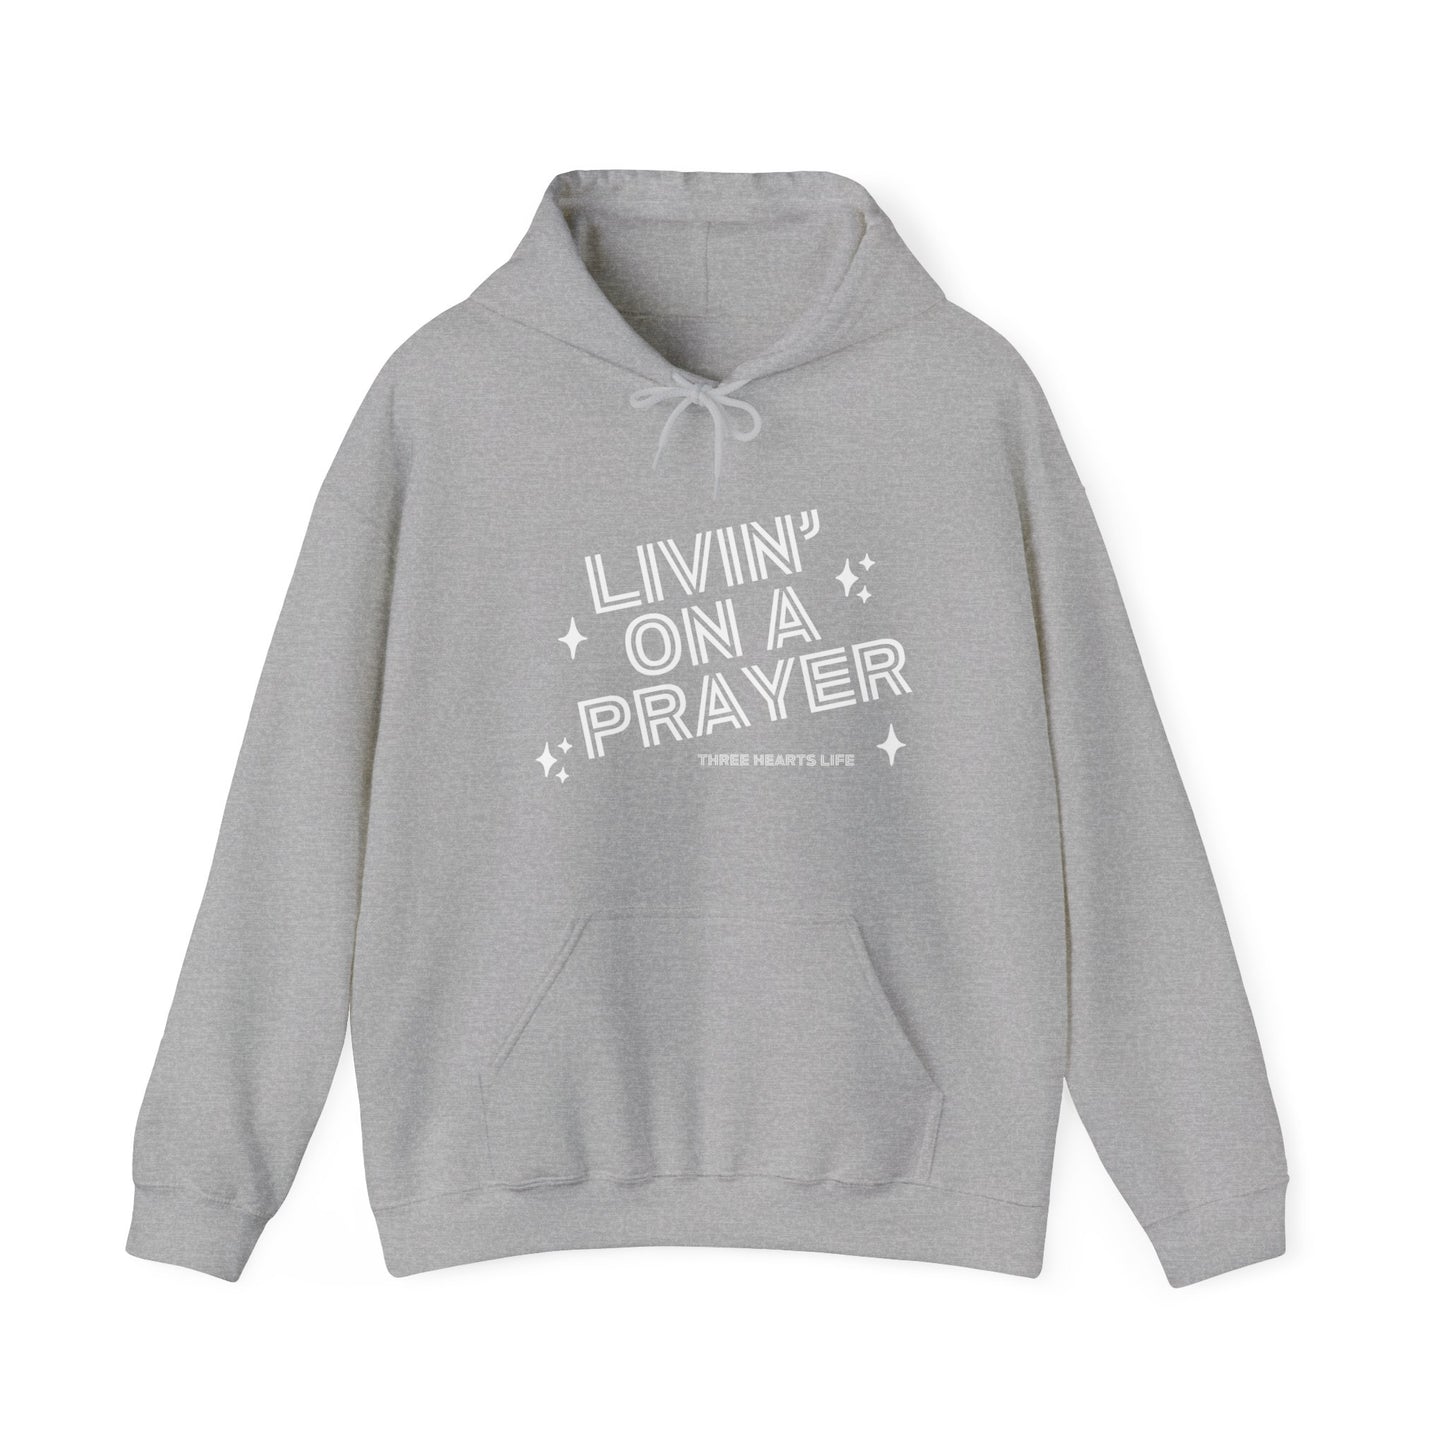 Livin' on a Prayer Unisex Hooded Sweatshirt